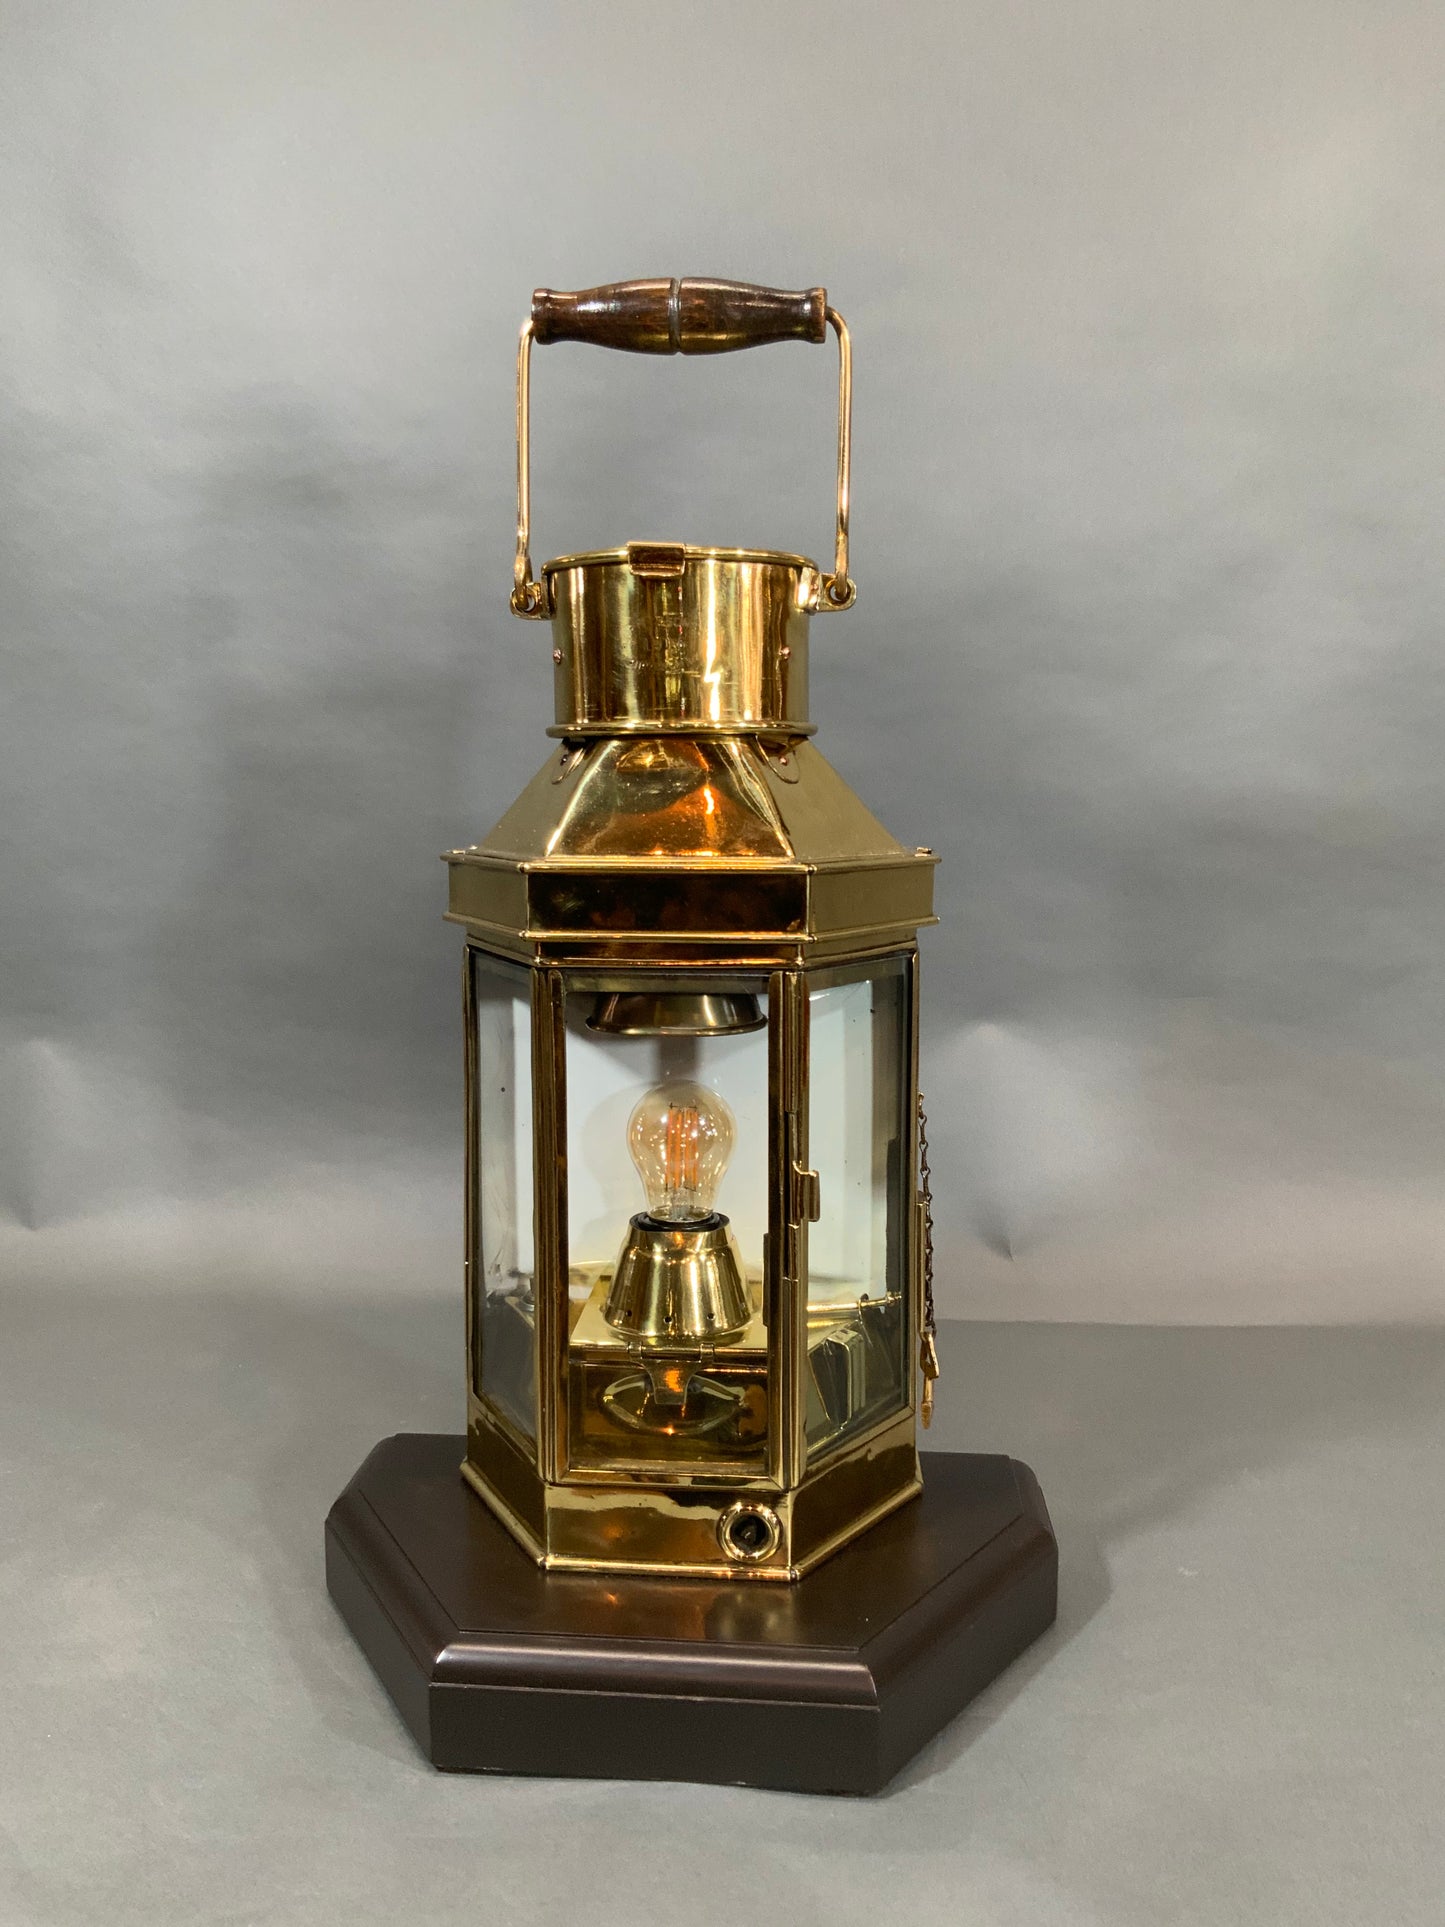 1916 Solid Brass Ship's Cabin Lantern from Bulpitt of Birmingham England - Lannan Gallery